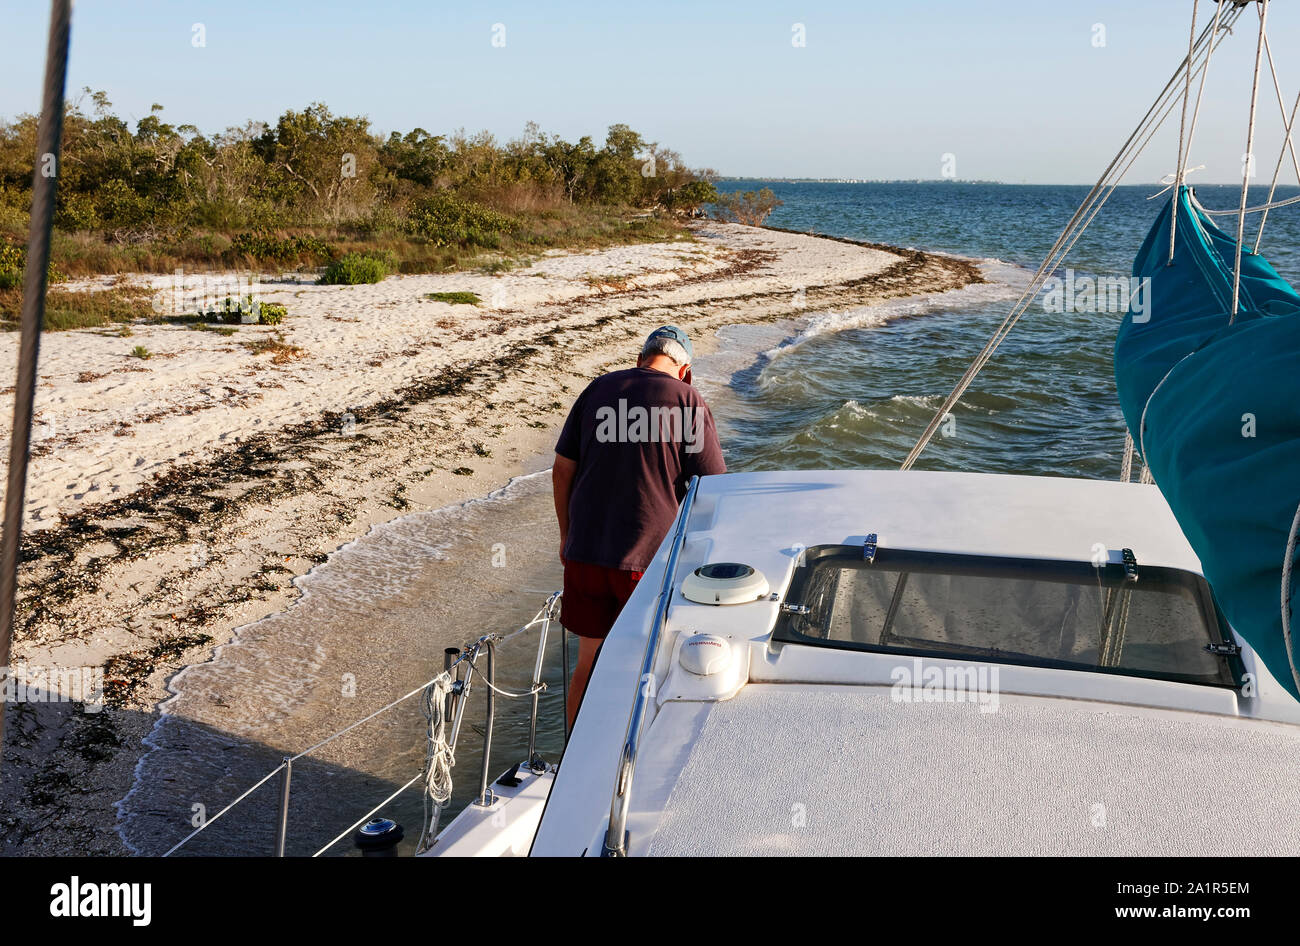 catamaran sailboat grounded, sand beach, man, captain, stuck, mistake, Charlotte Harbor, Florida, FL; horizontal; MR Stock Photo